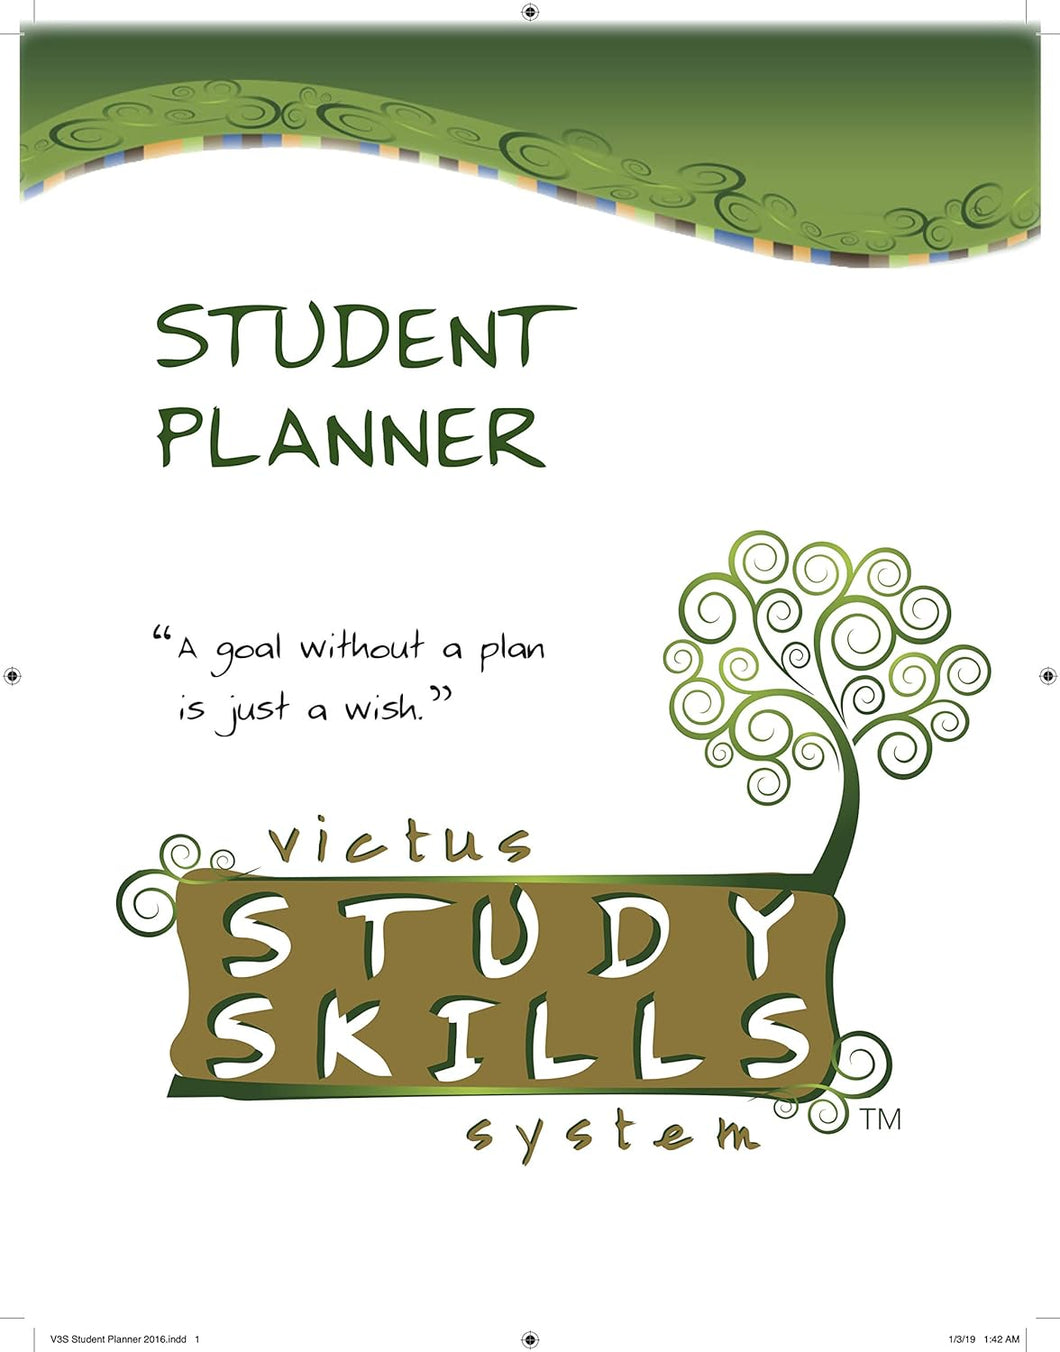 Victus Study Skills Student Planner